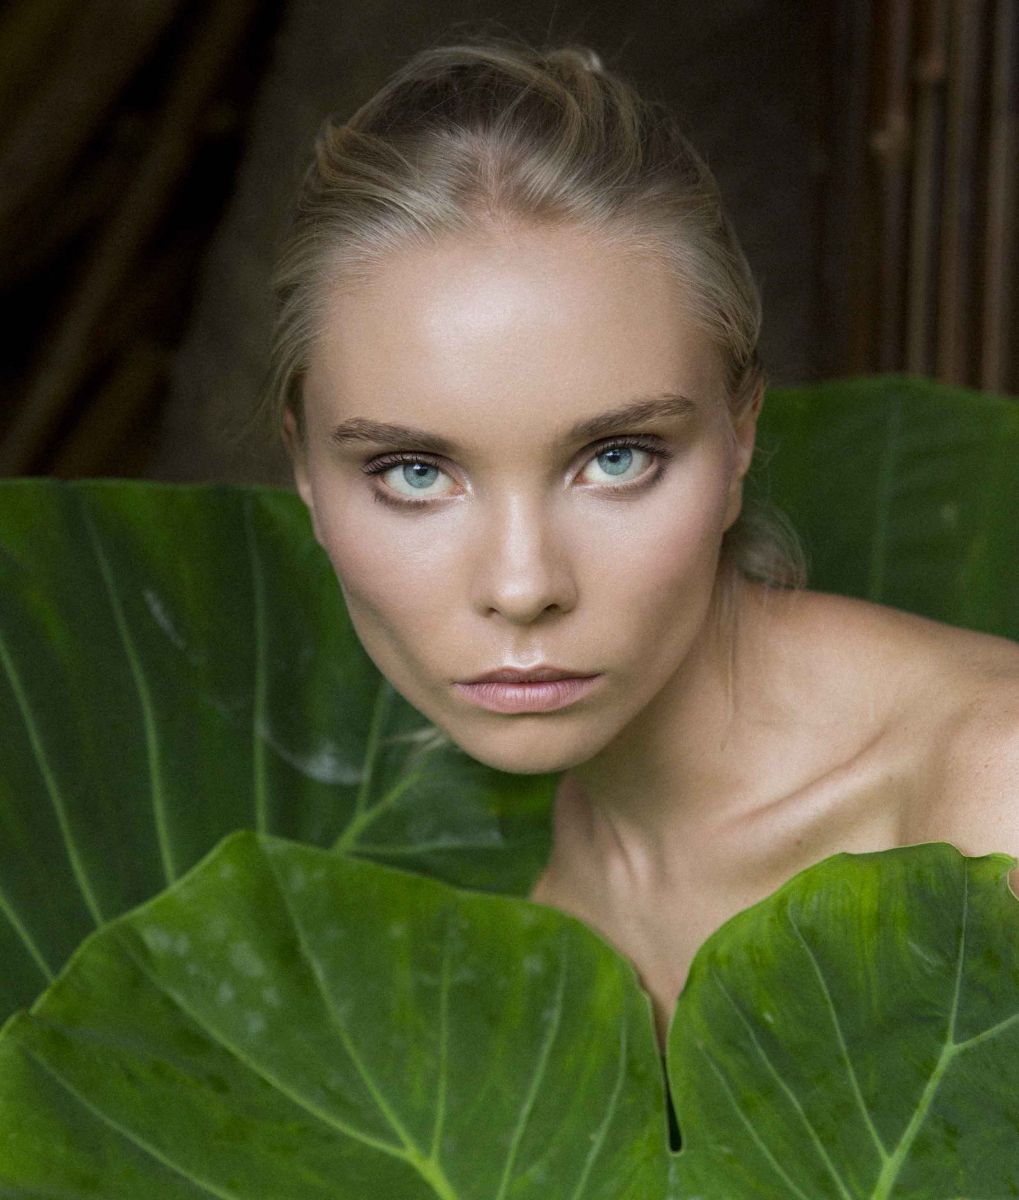 Balistarz-model-Aspen-Gerasimov-beauty-portrait-shot-looking-sharp-to-the-camera